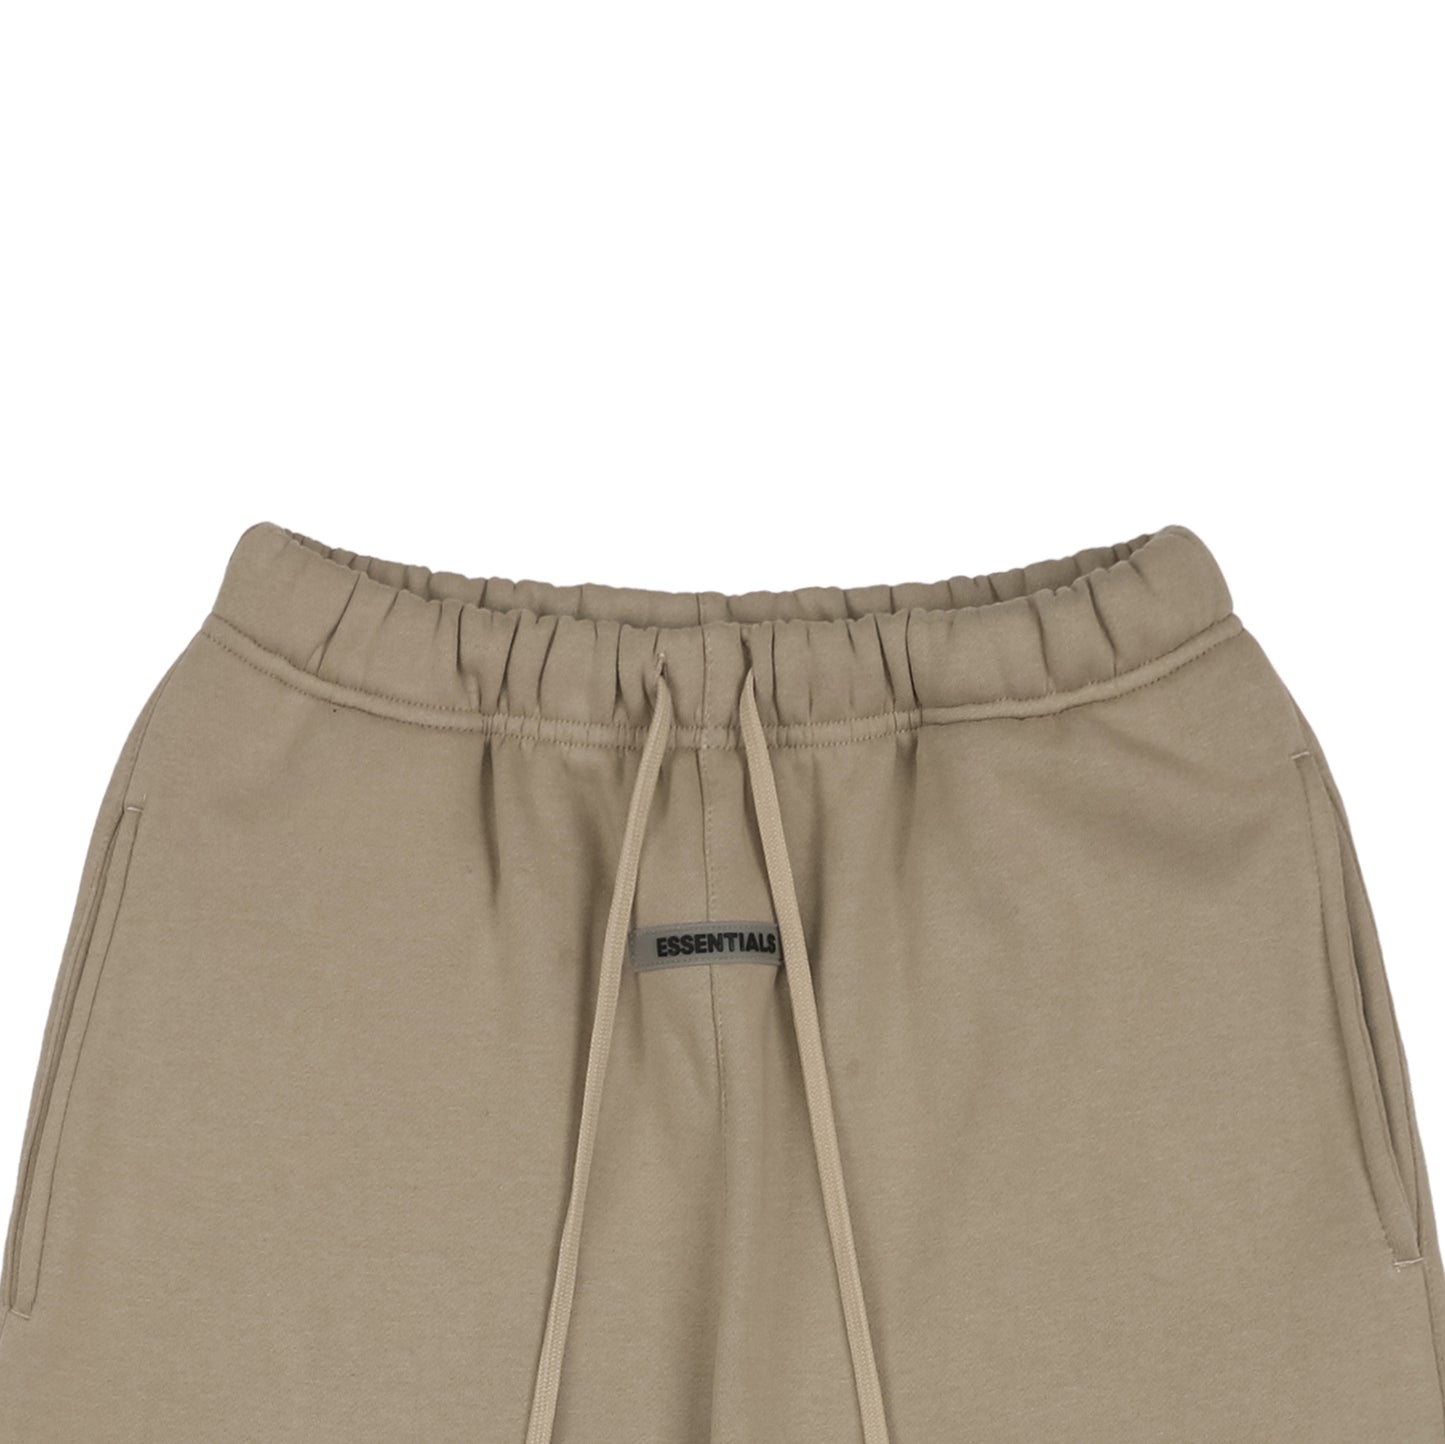 FOG Light Brown E55ential5 Shorts